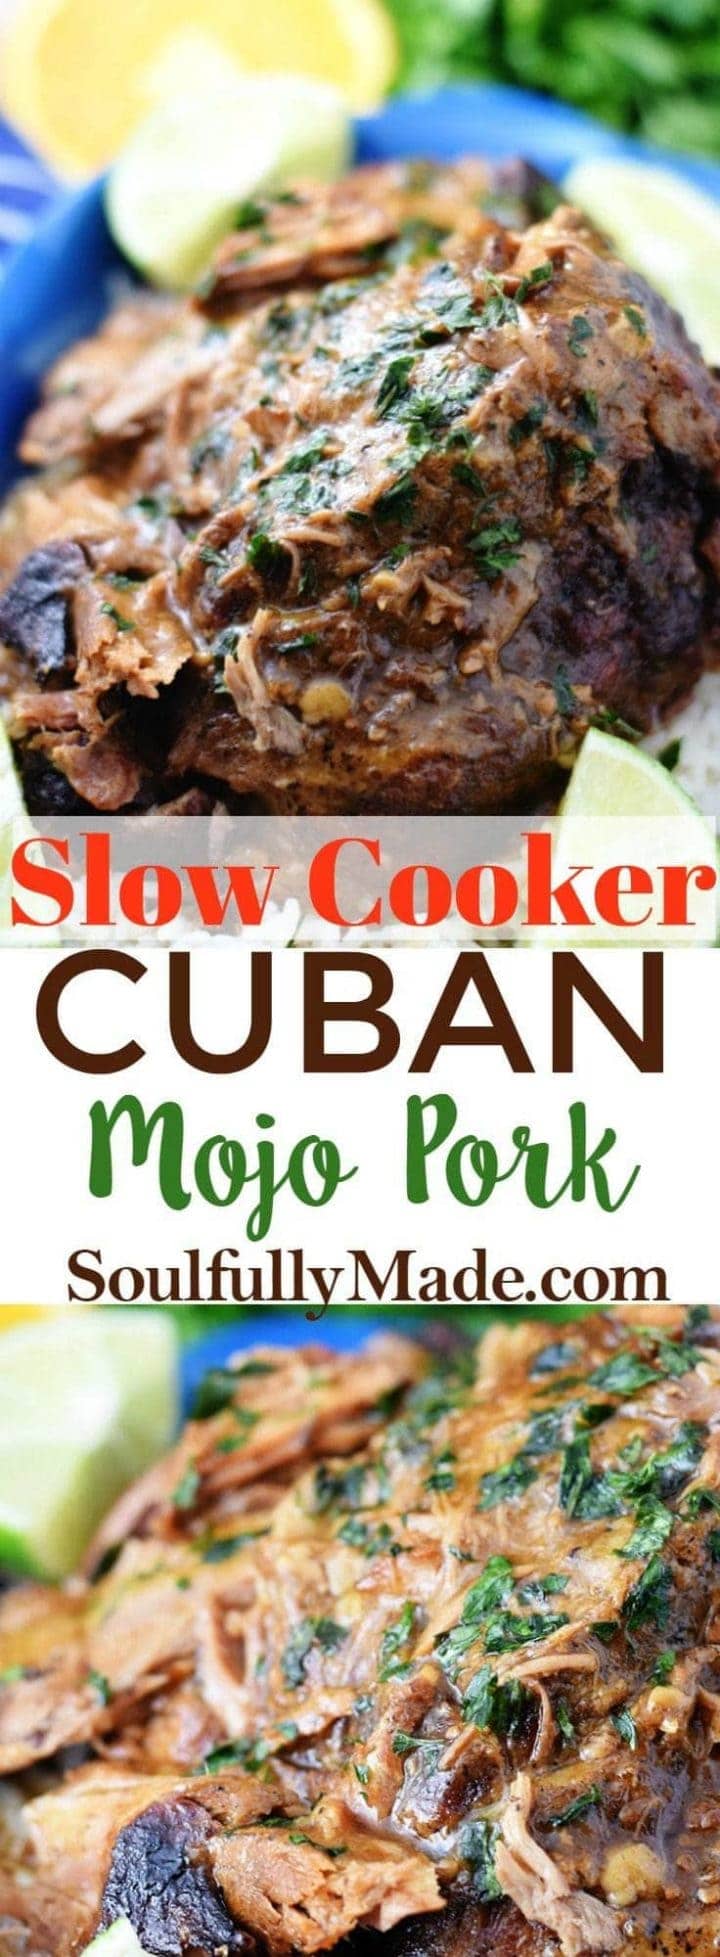 Slow Cooker Cuban Mojo Pork - Soulfully Made